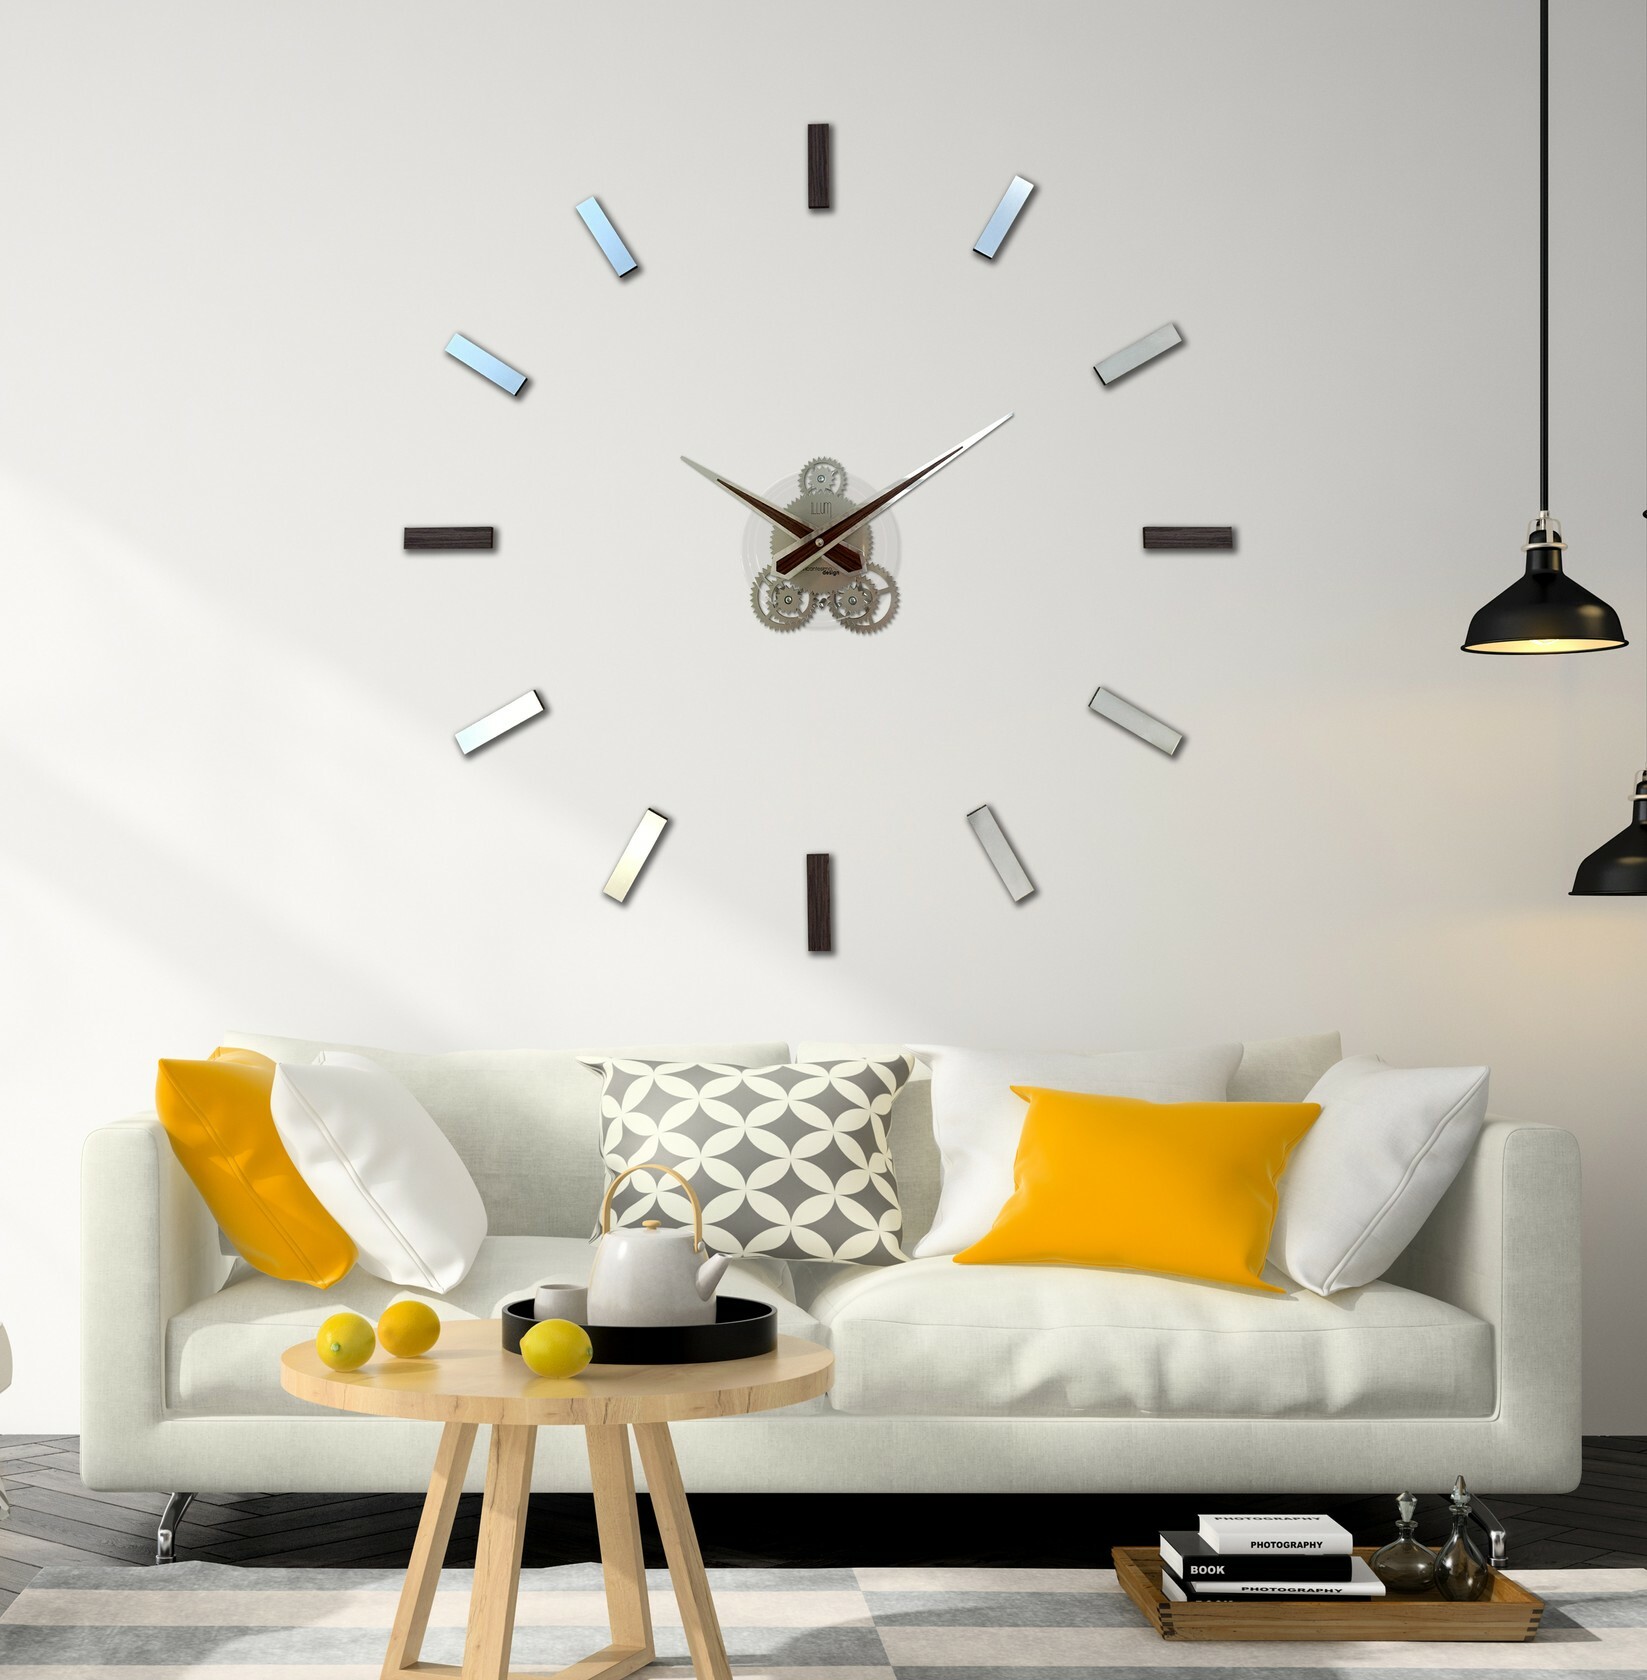 Сайты настенных часов. Настенные часы Incantesimo Design. Часы СЕНДРУМ икеа. Дизайнерские настенные часы в интерьере. Дизайнерские часы на стену.